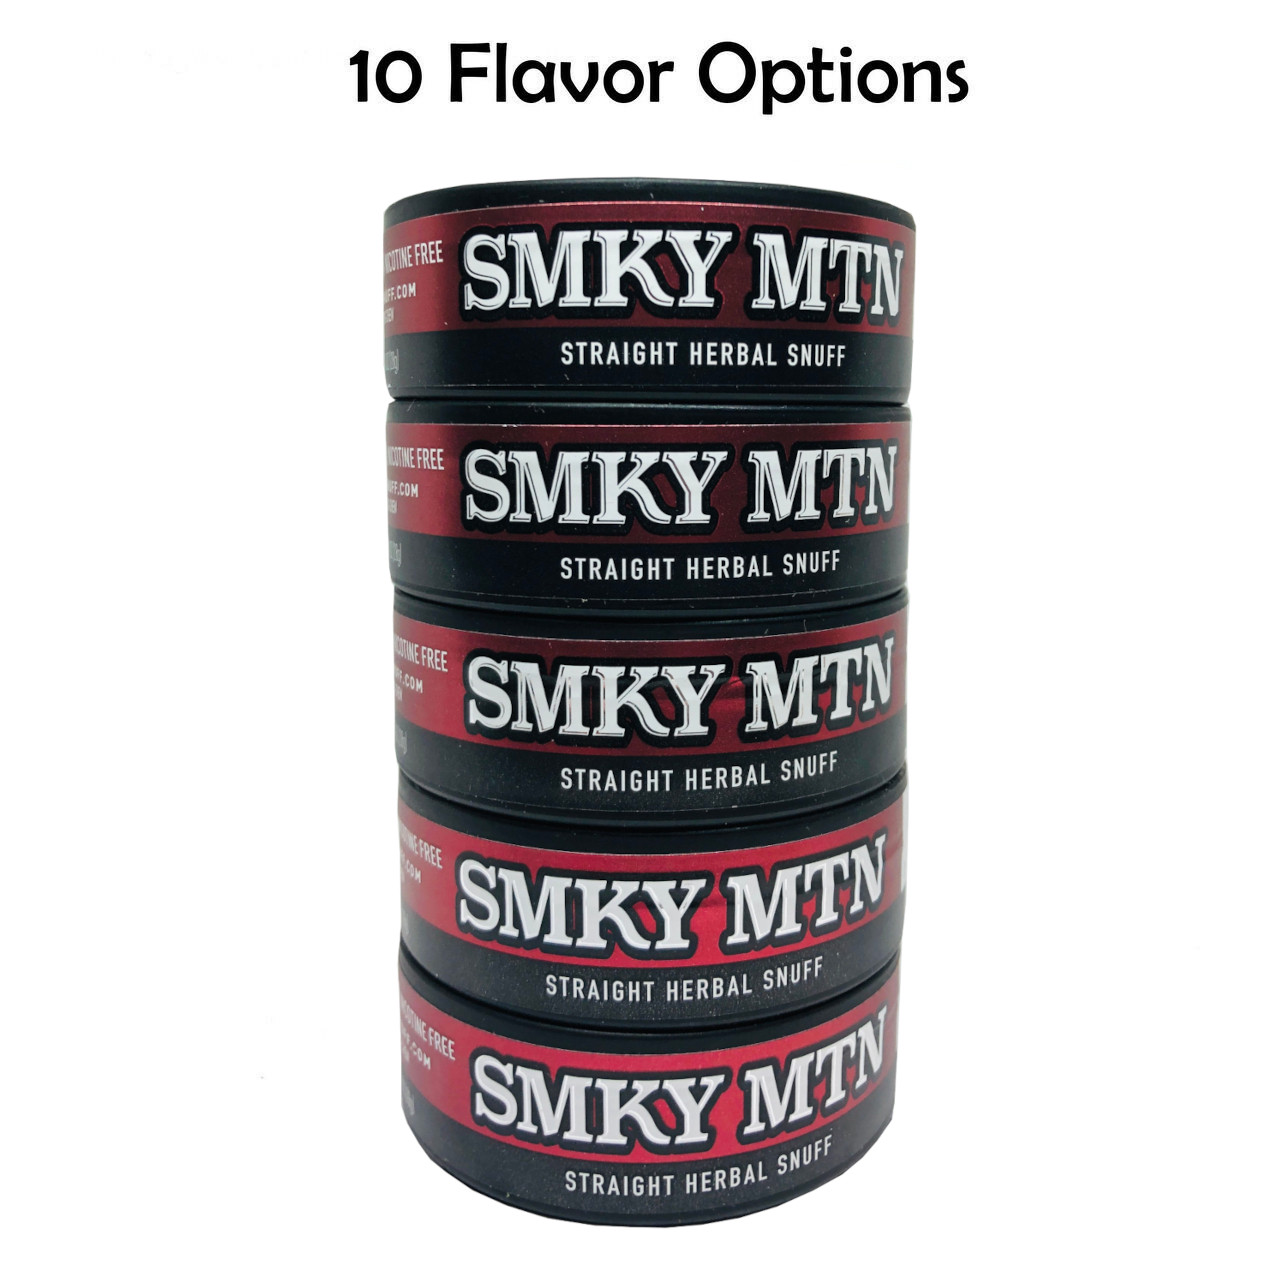 Smokey Mountain Herbal Snuff Option Main Image 5 Cans